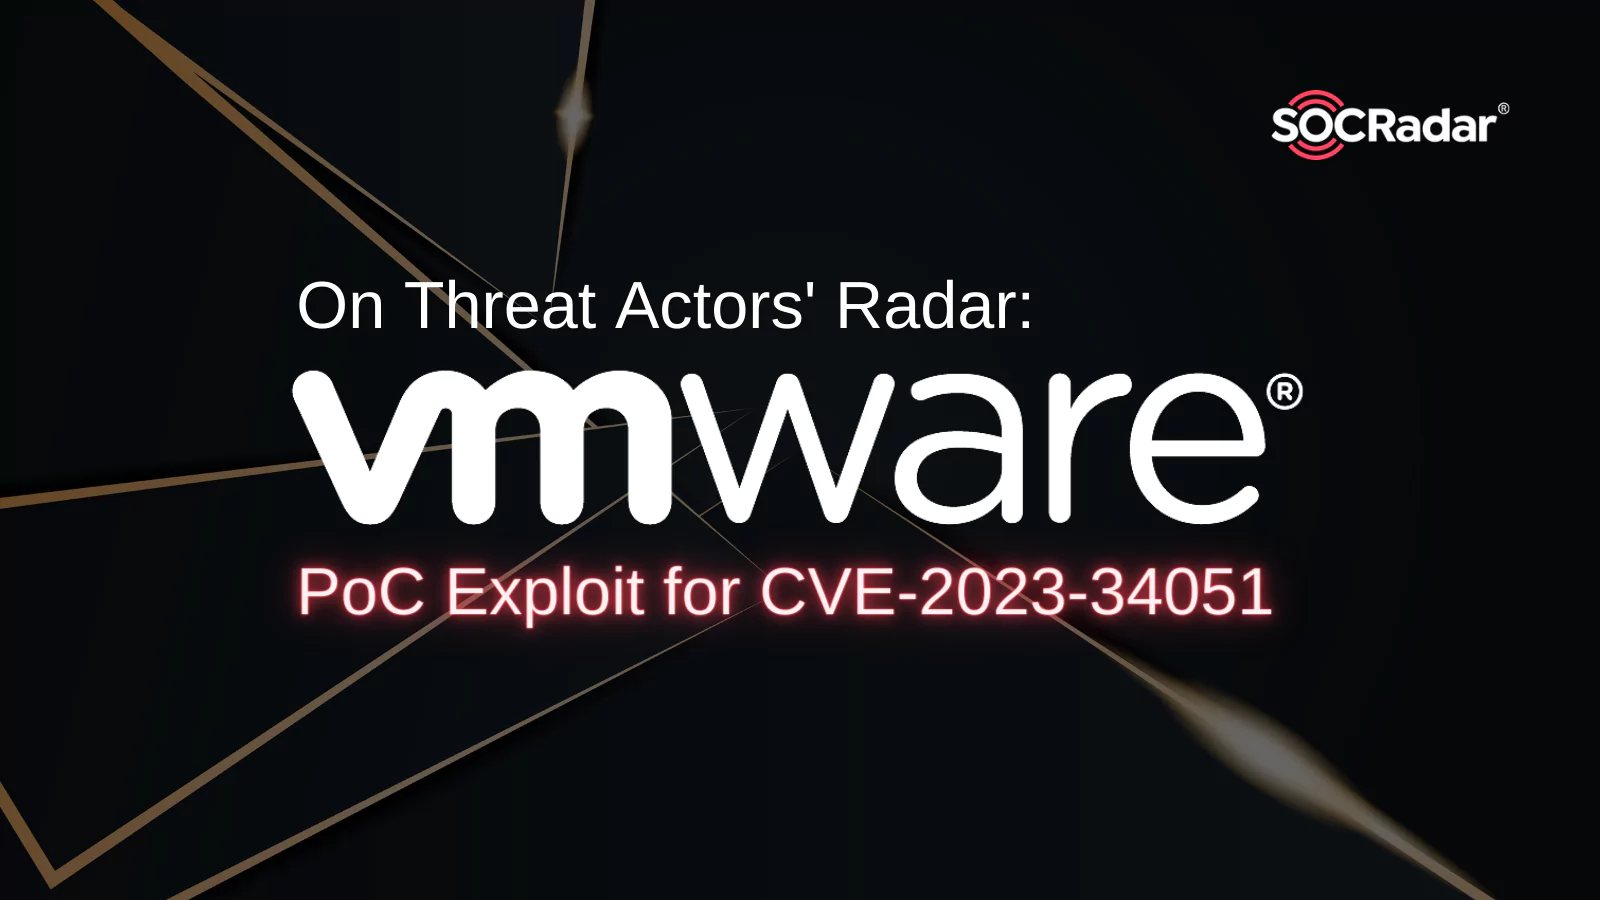 SOCRadar® Cyber Intelligence Inc. | On Threat Actors’ Radar: PoC Exploits for VMware Aria Operations Vulnerability (CVE-2023-34051), and More